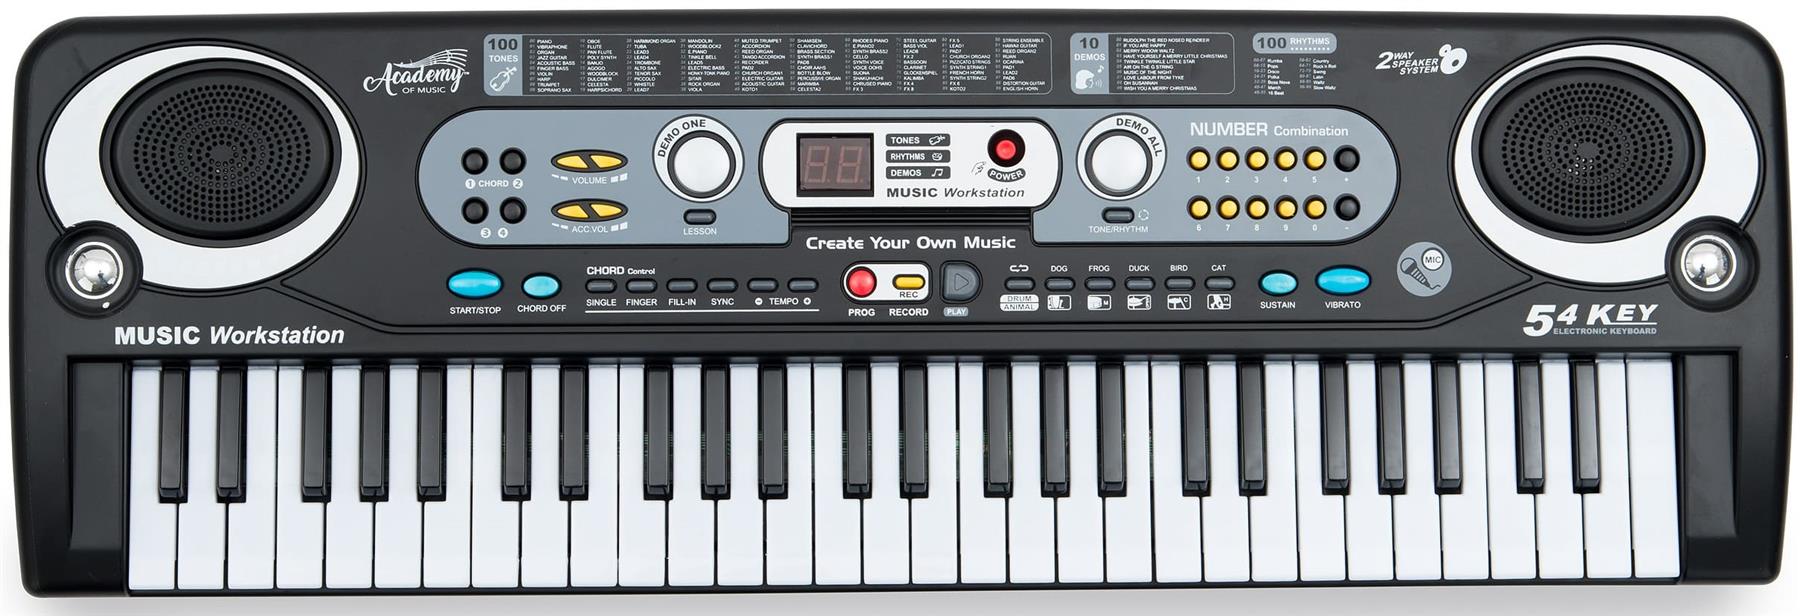 Academy of Music 54 Key Keyboard